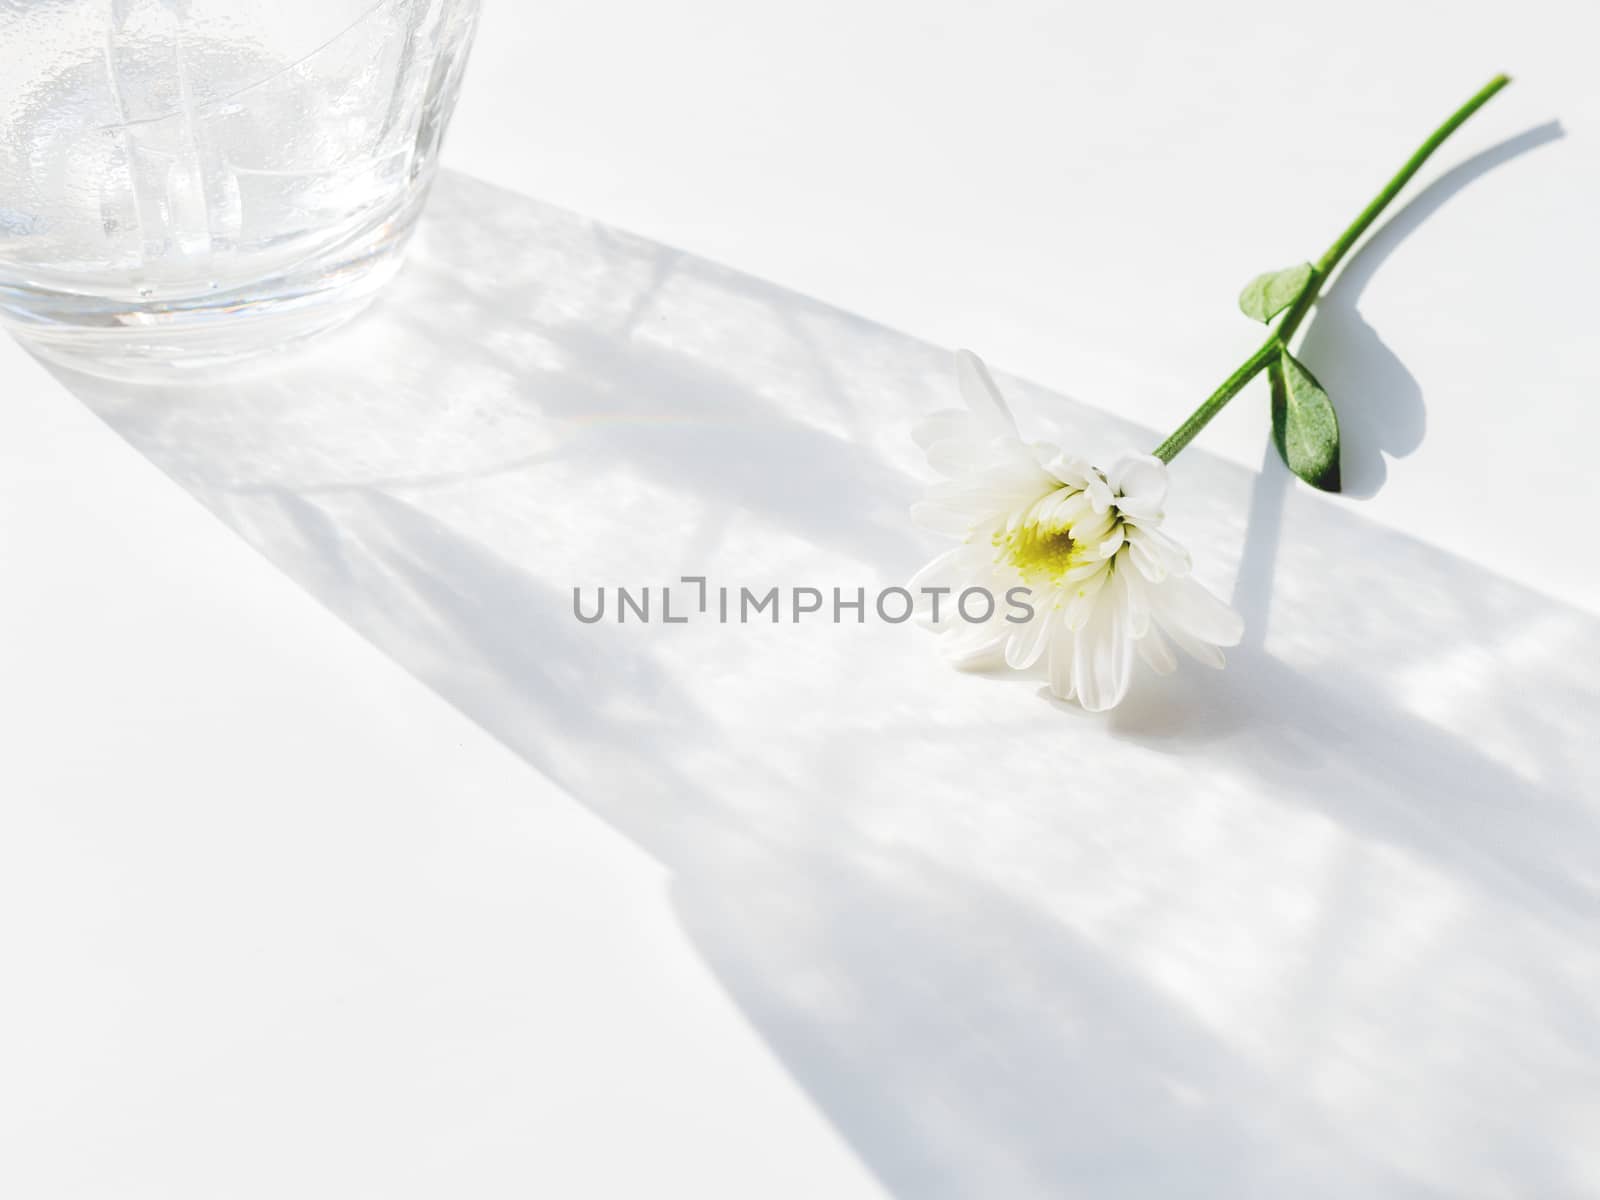 Blooming chrysanthemum flower lying in laced shadow of transparent glass vase. by aksenovko